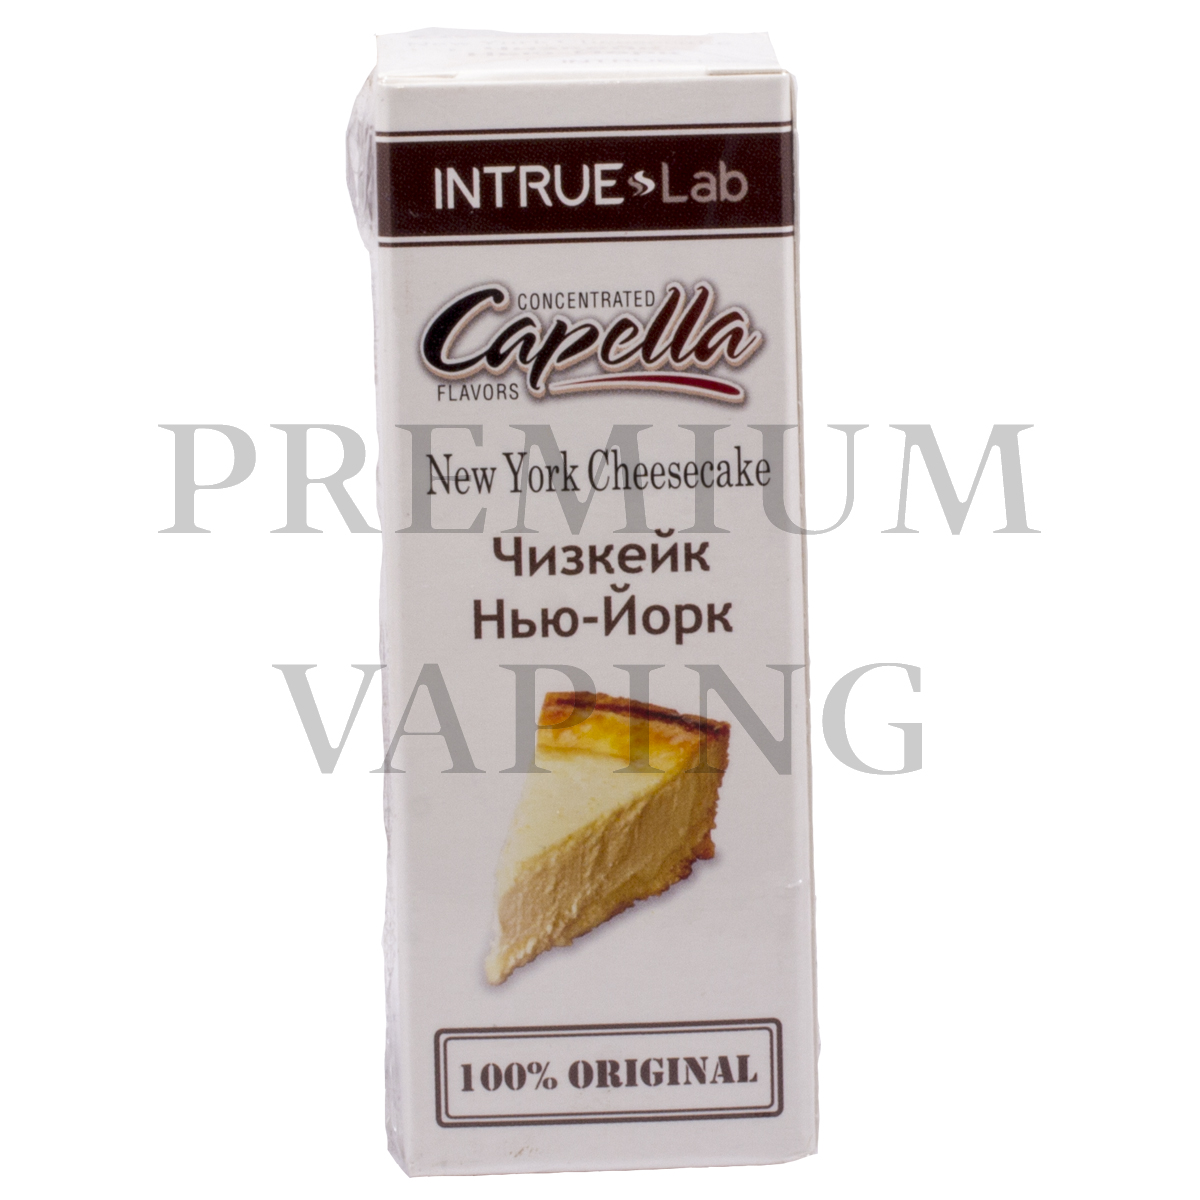 Capella Intrue Lab — New York Cheesecake